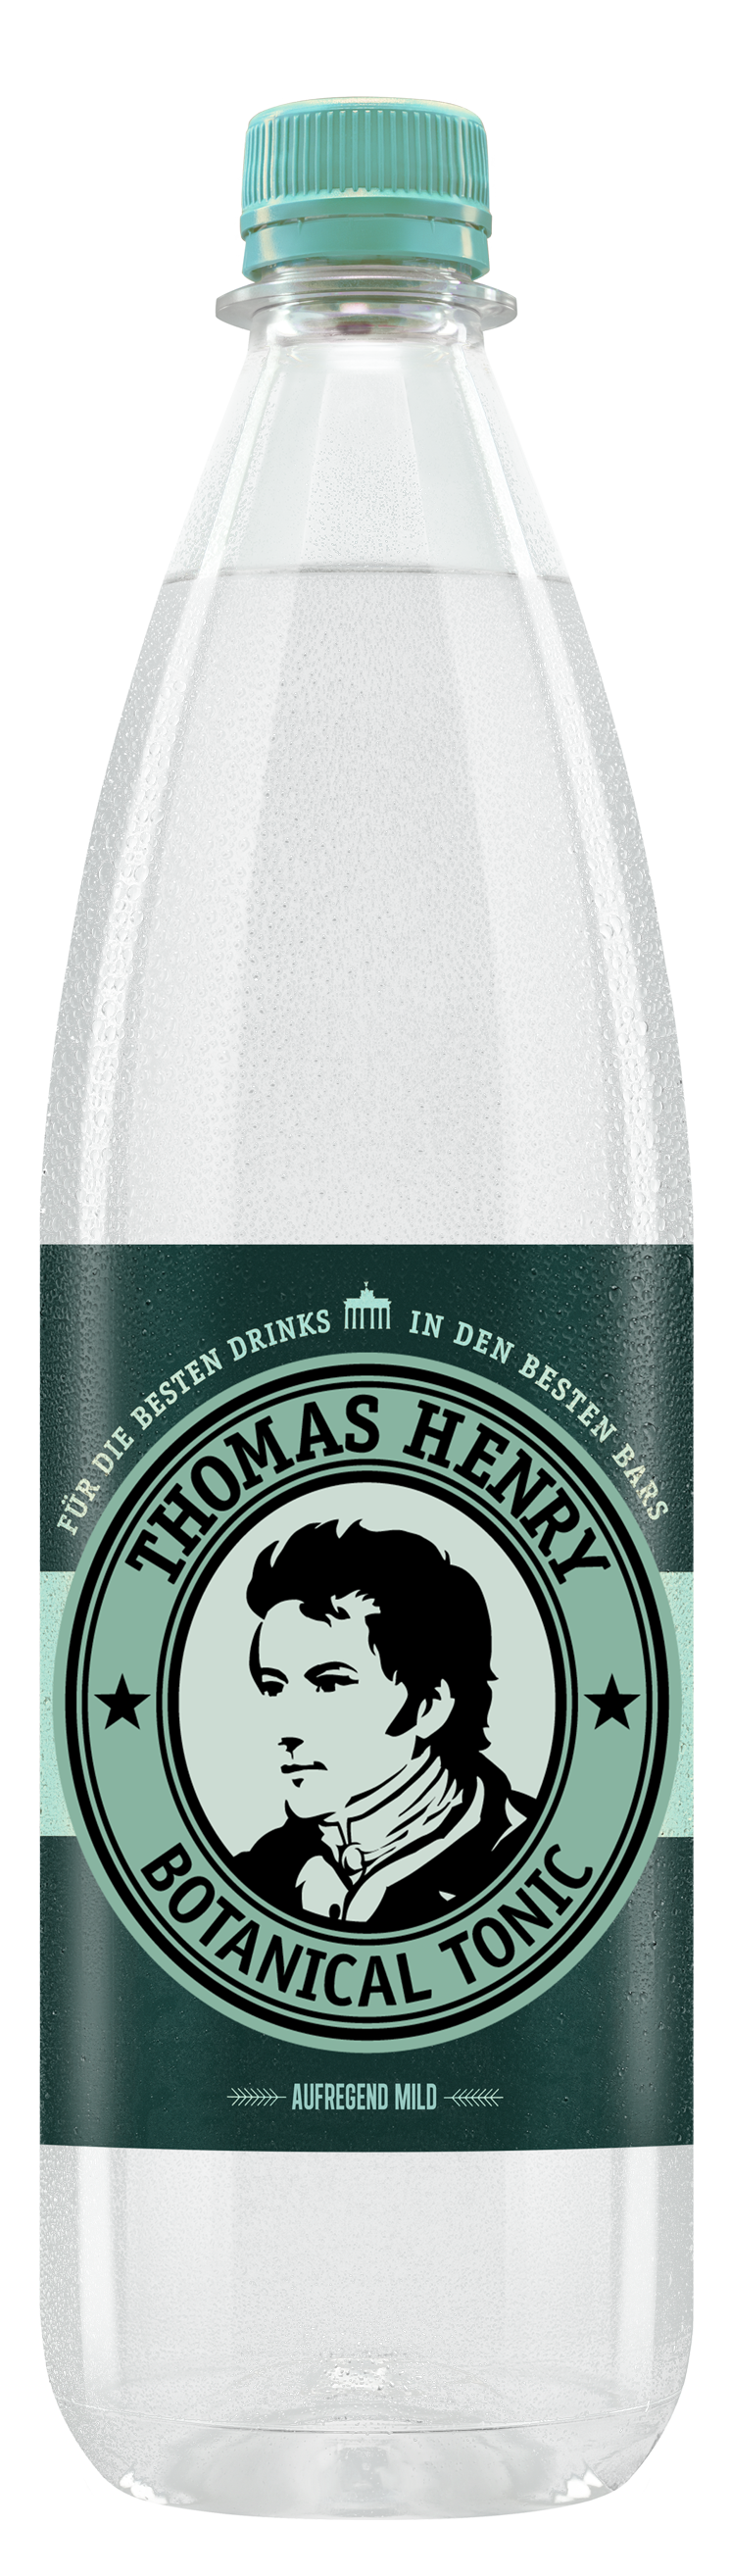 Thomas Henry Botanical Tonic Water 1,0L MEHRWEG